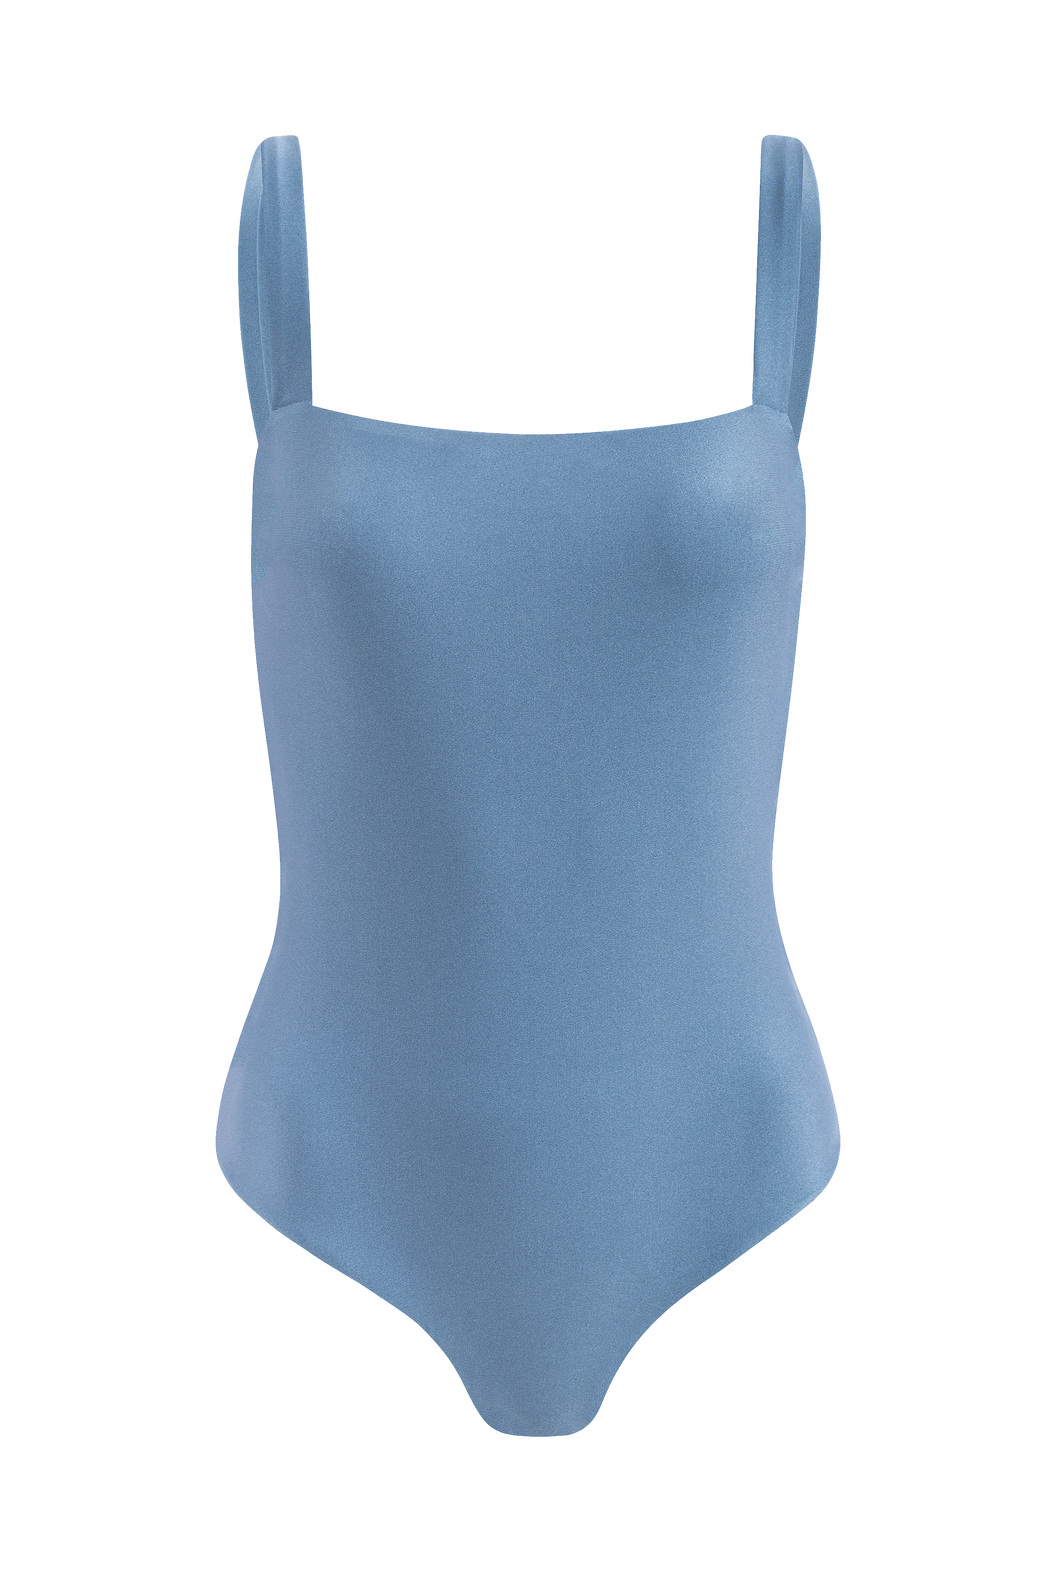 Oman swimsuit | Shiny blue